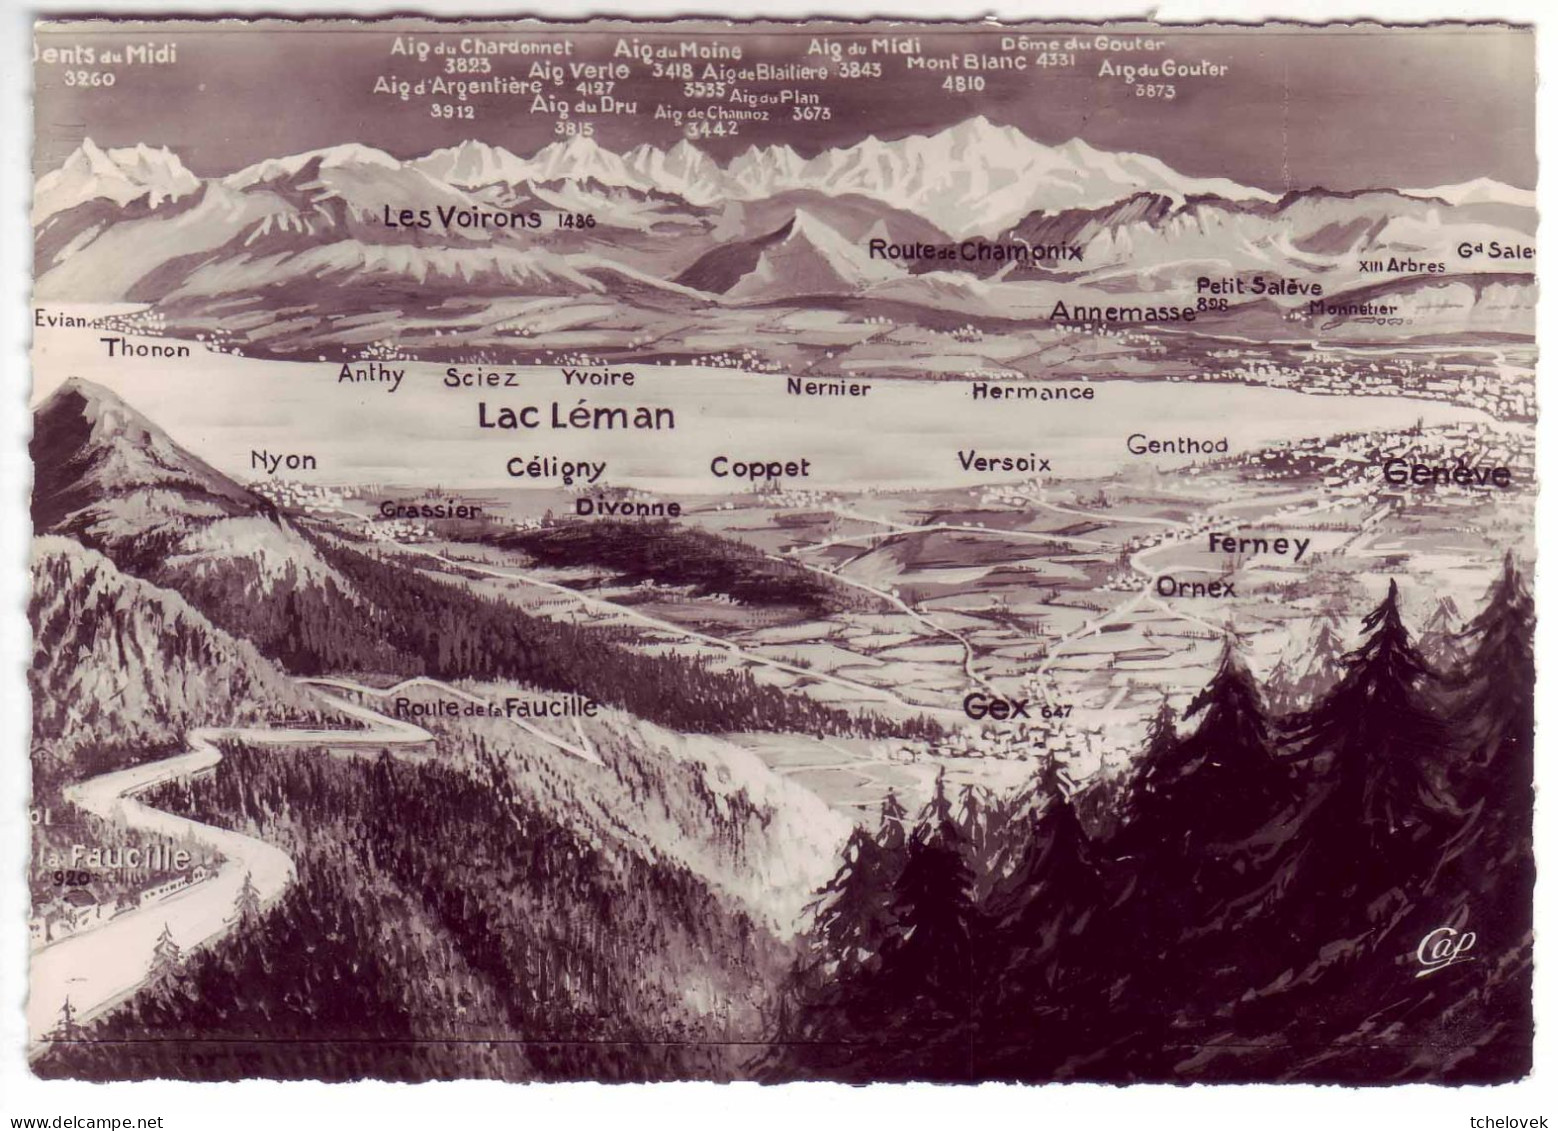 (01). Lac Leman. 3222 Vue Du Col De La Faucille & 2068 - Non Classificati